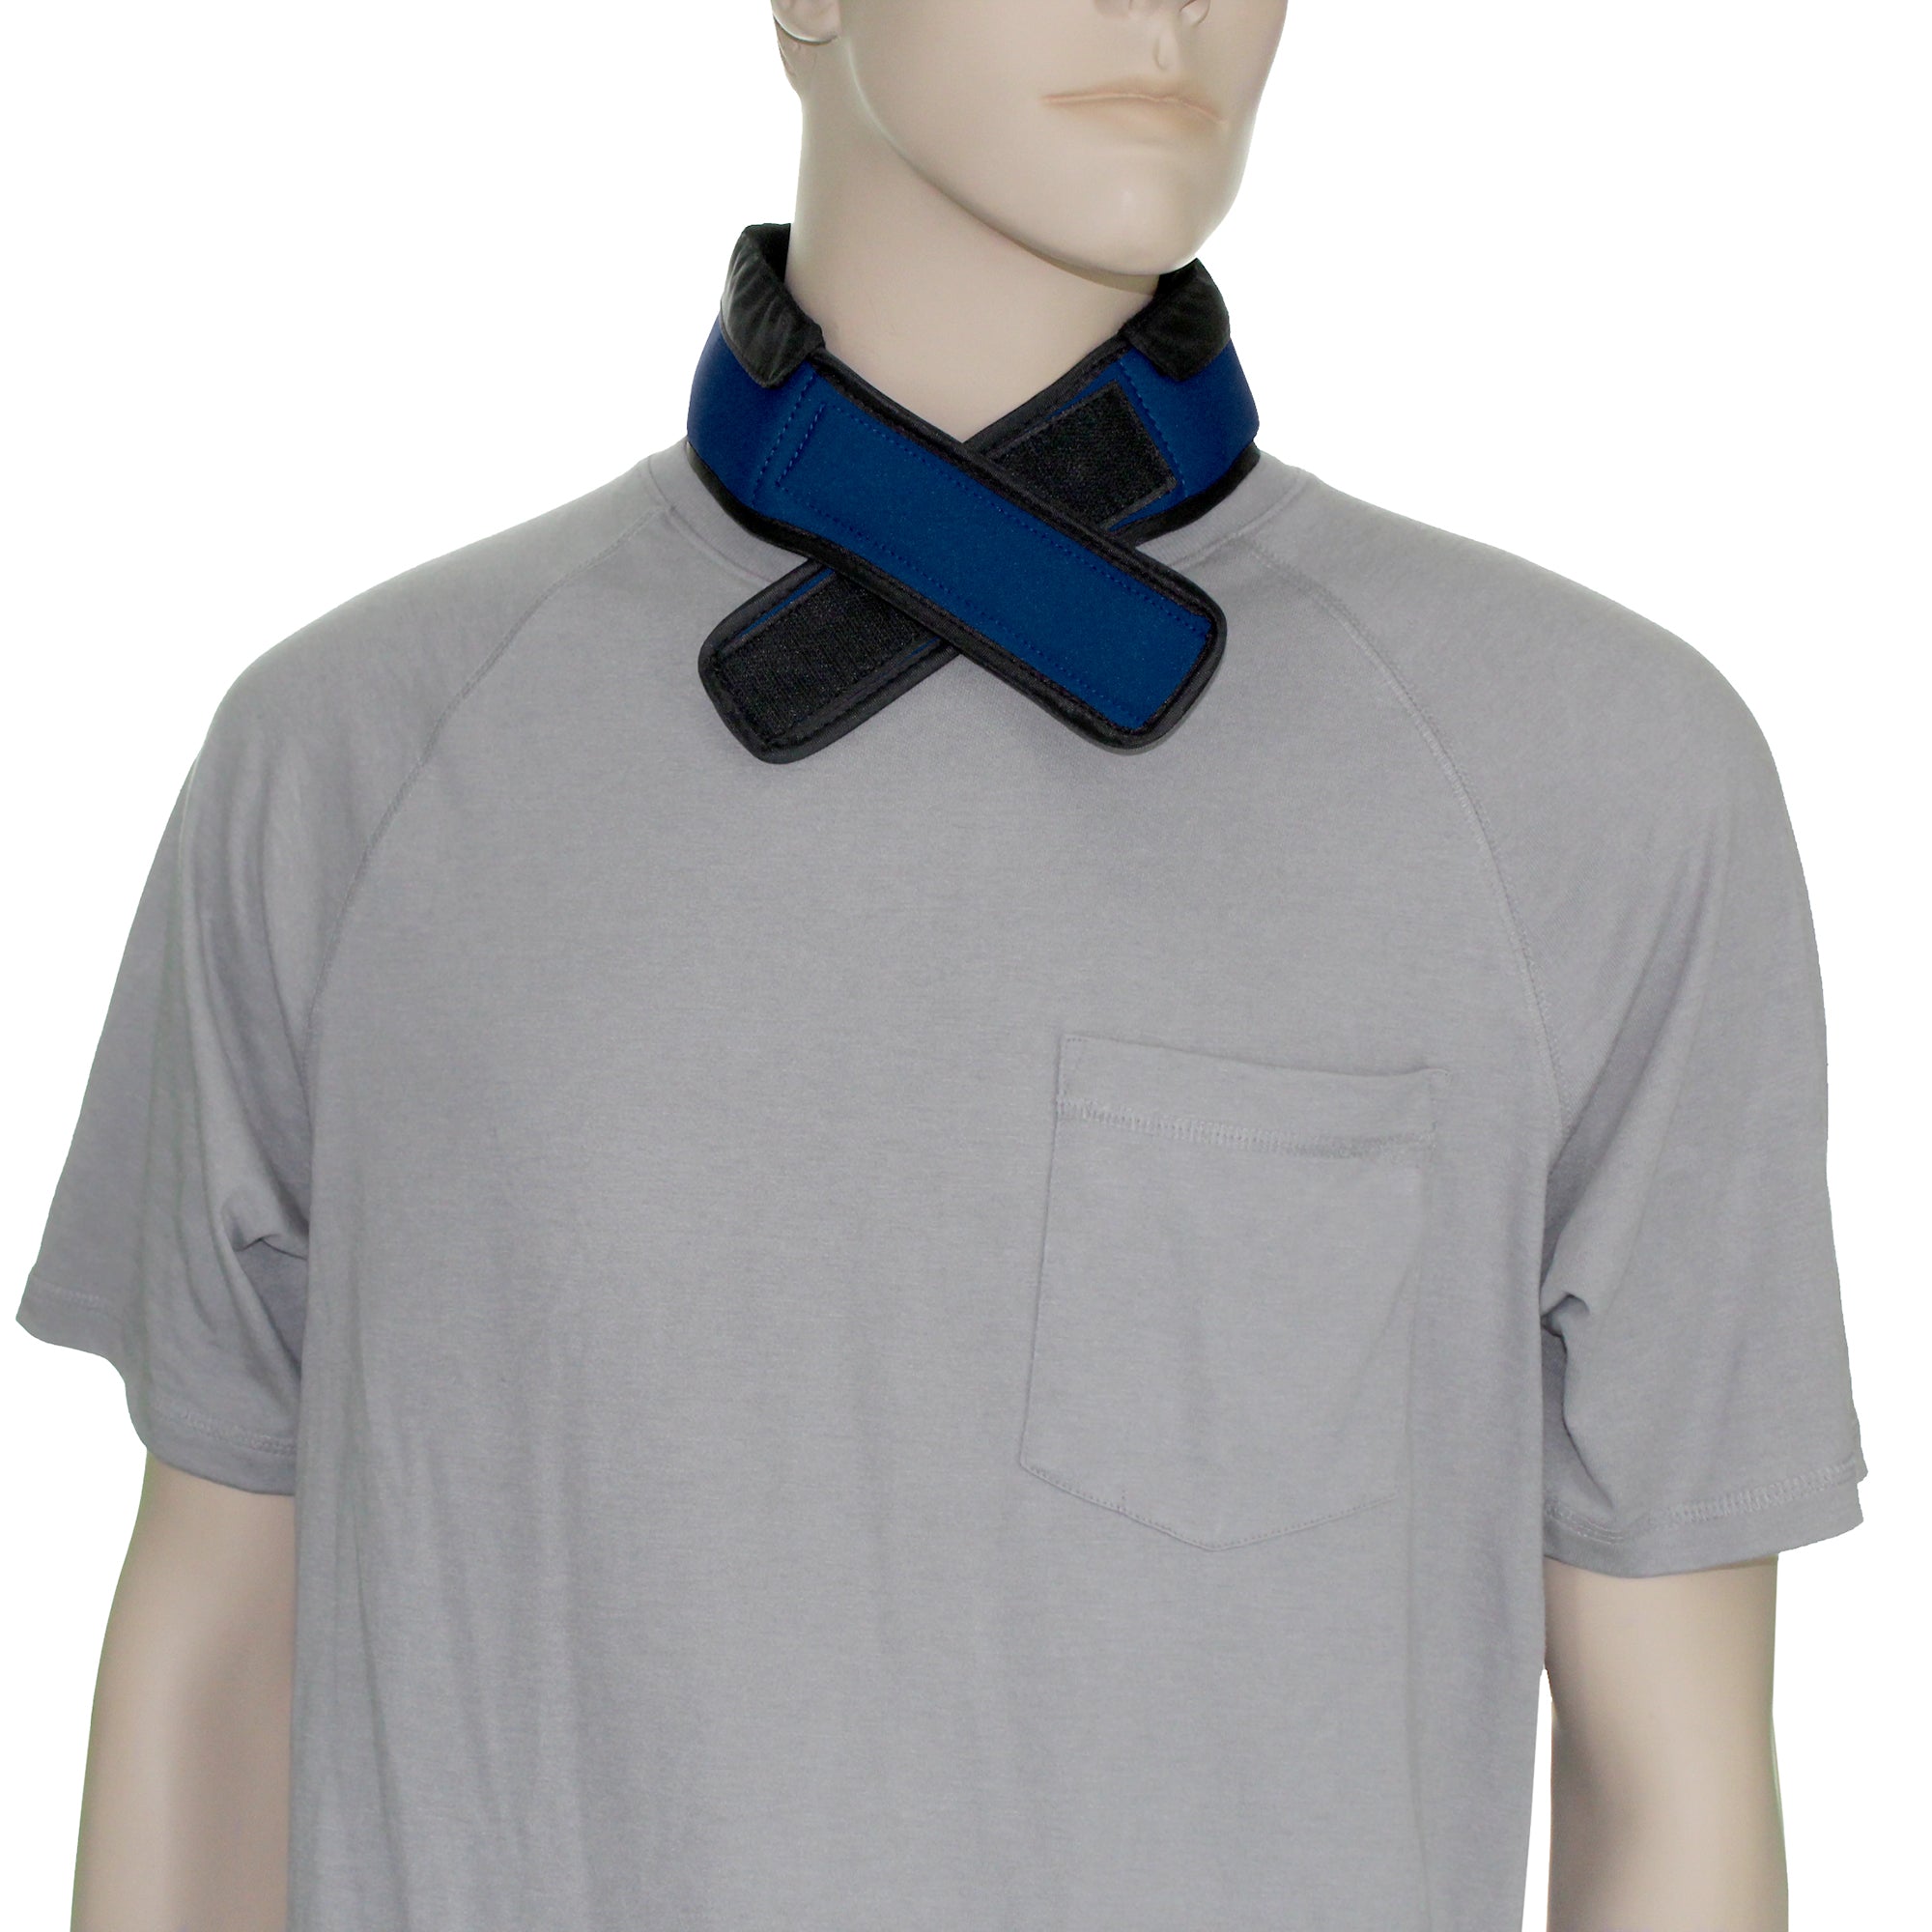 FlexiFreeze Cooling Collar, blue, on mannequin